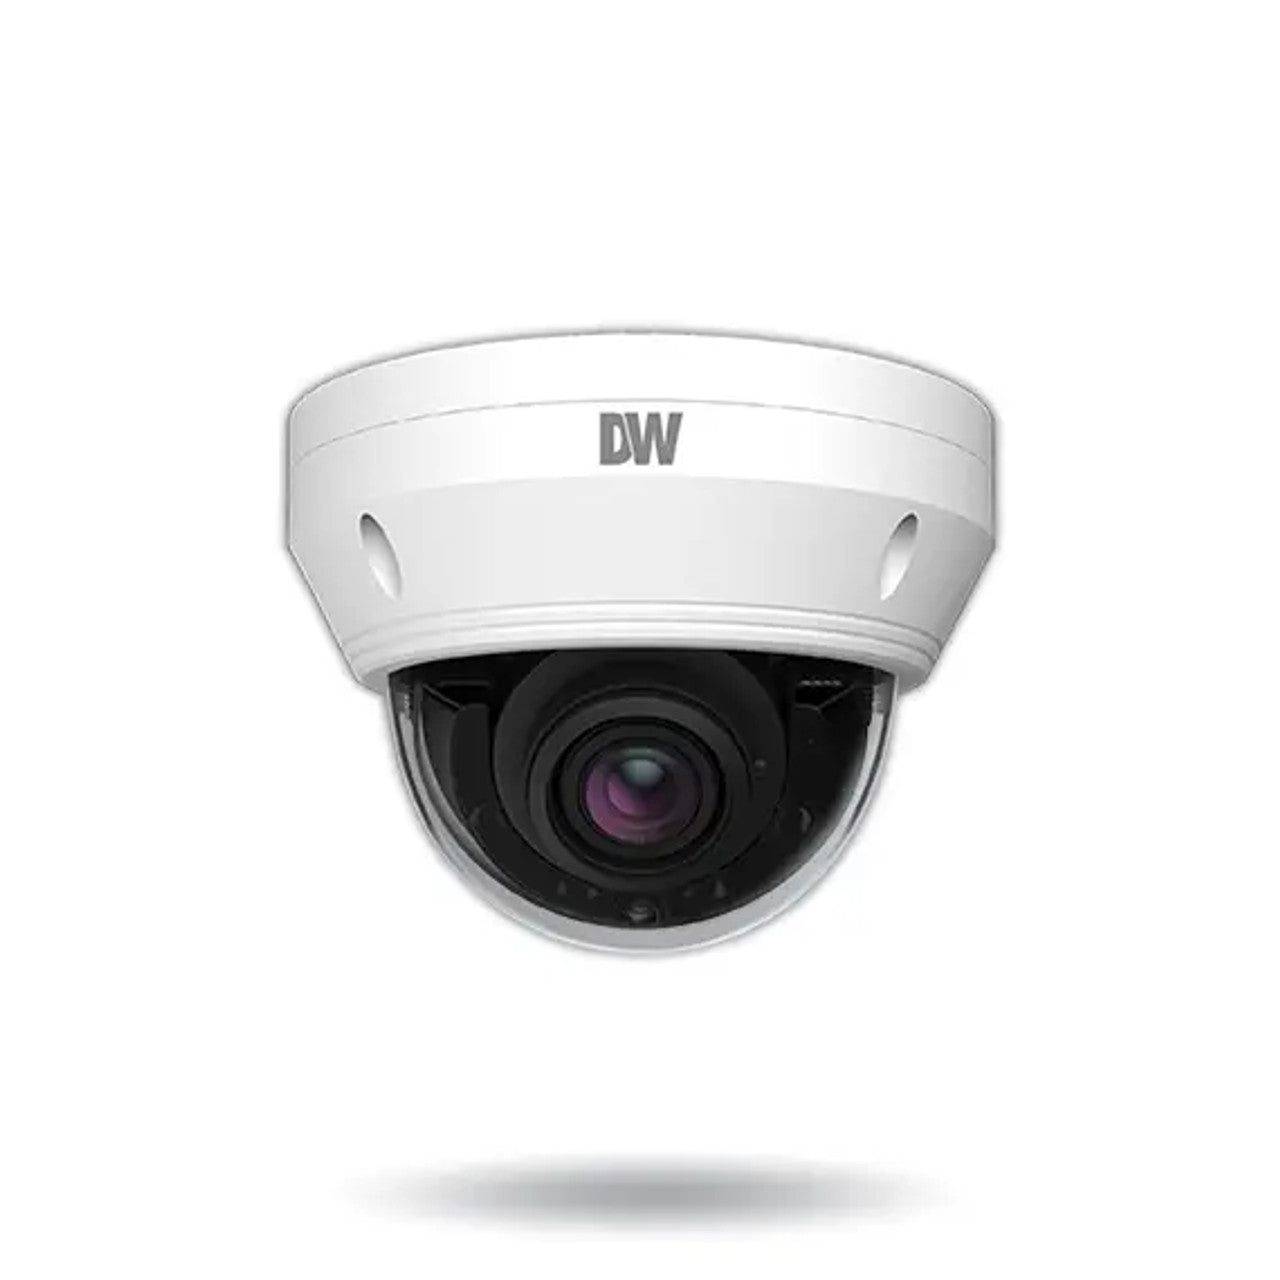 Digital Watchdog DWC-VSDG04MI 4MP WDR Outdoor Dome IP Camera with Smart IR, 2.8~12mm Varifocal Lens, NDAA Compliant, White